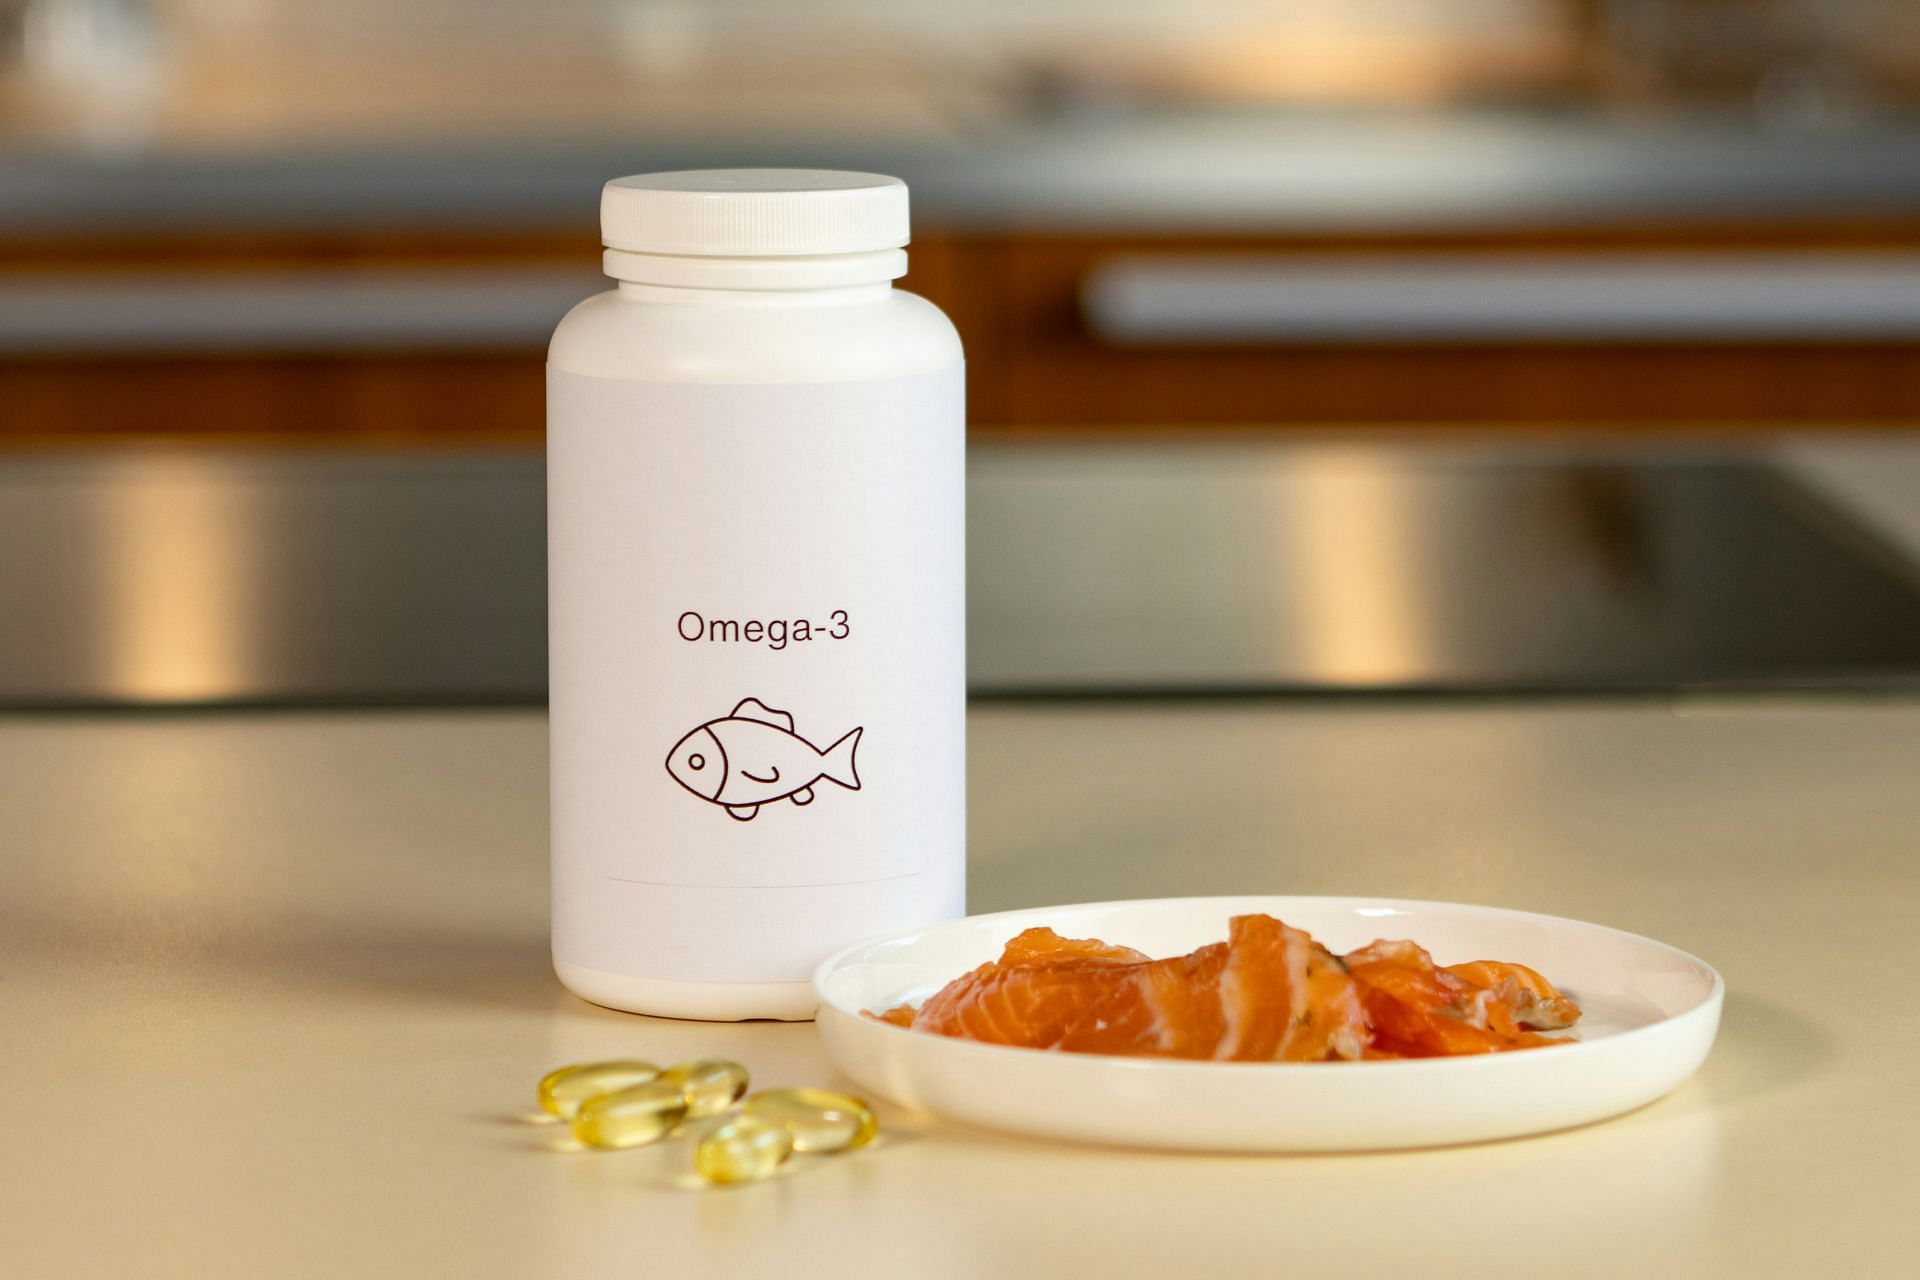 What are the omega-3 types?(Image by Aleksander Saks/Unsplash)